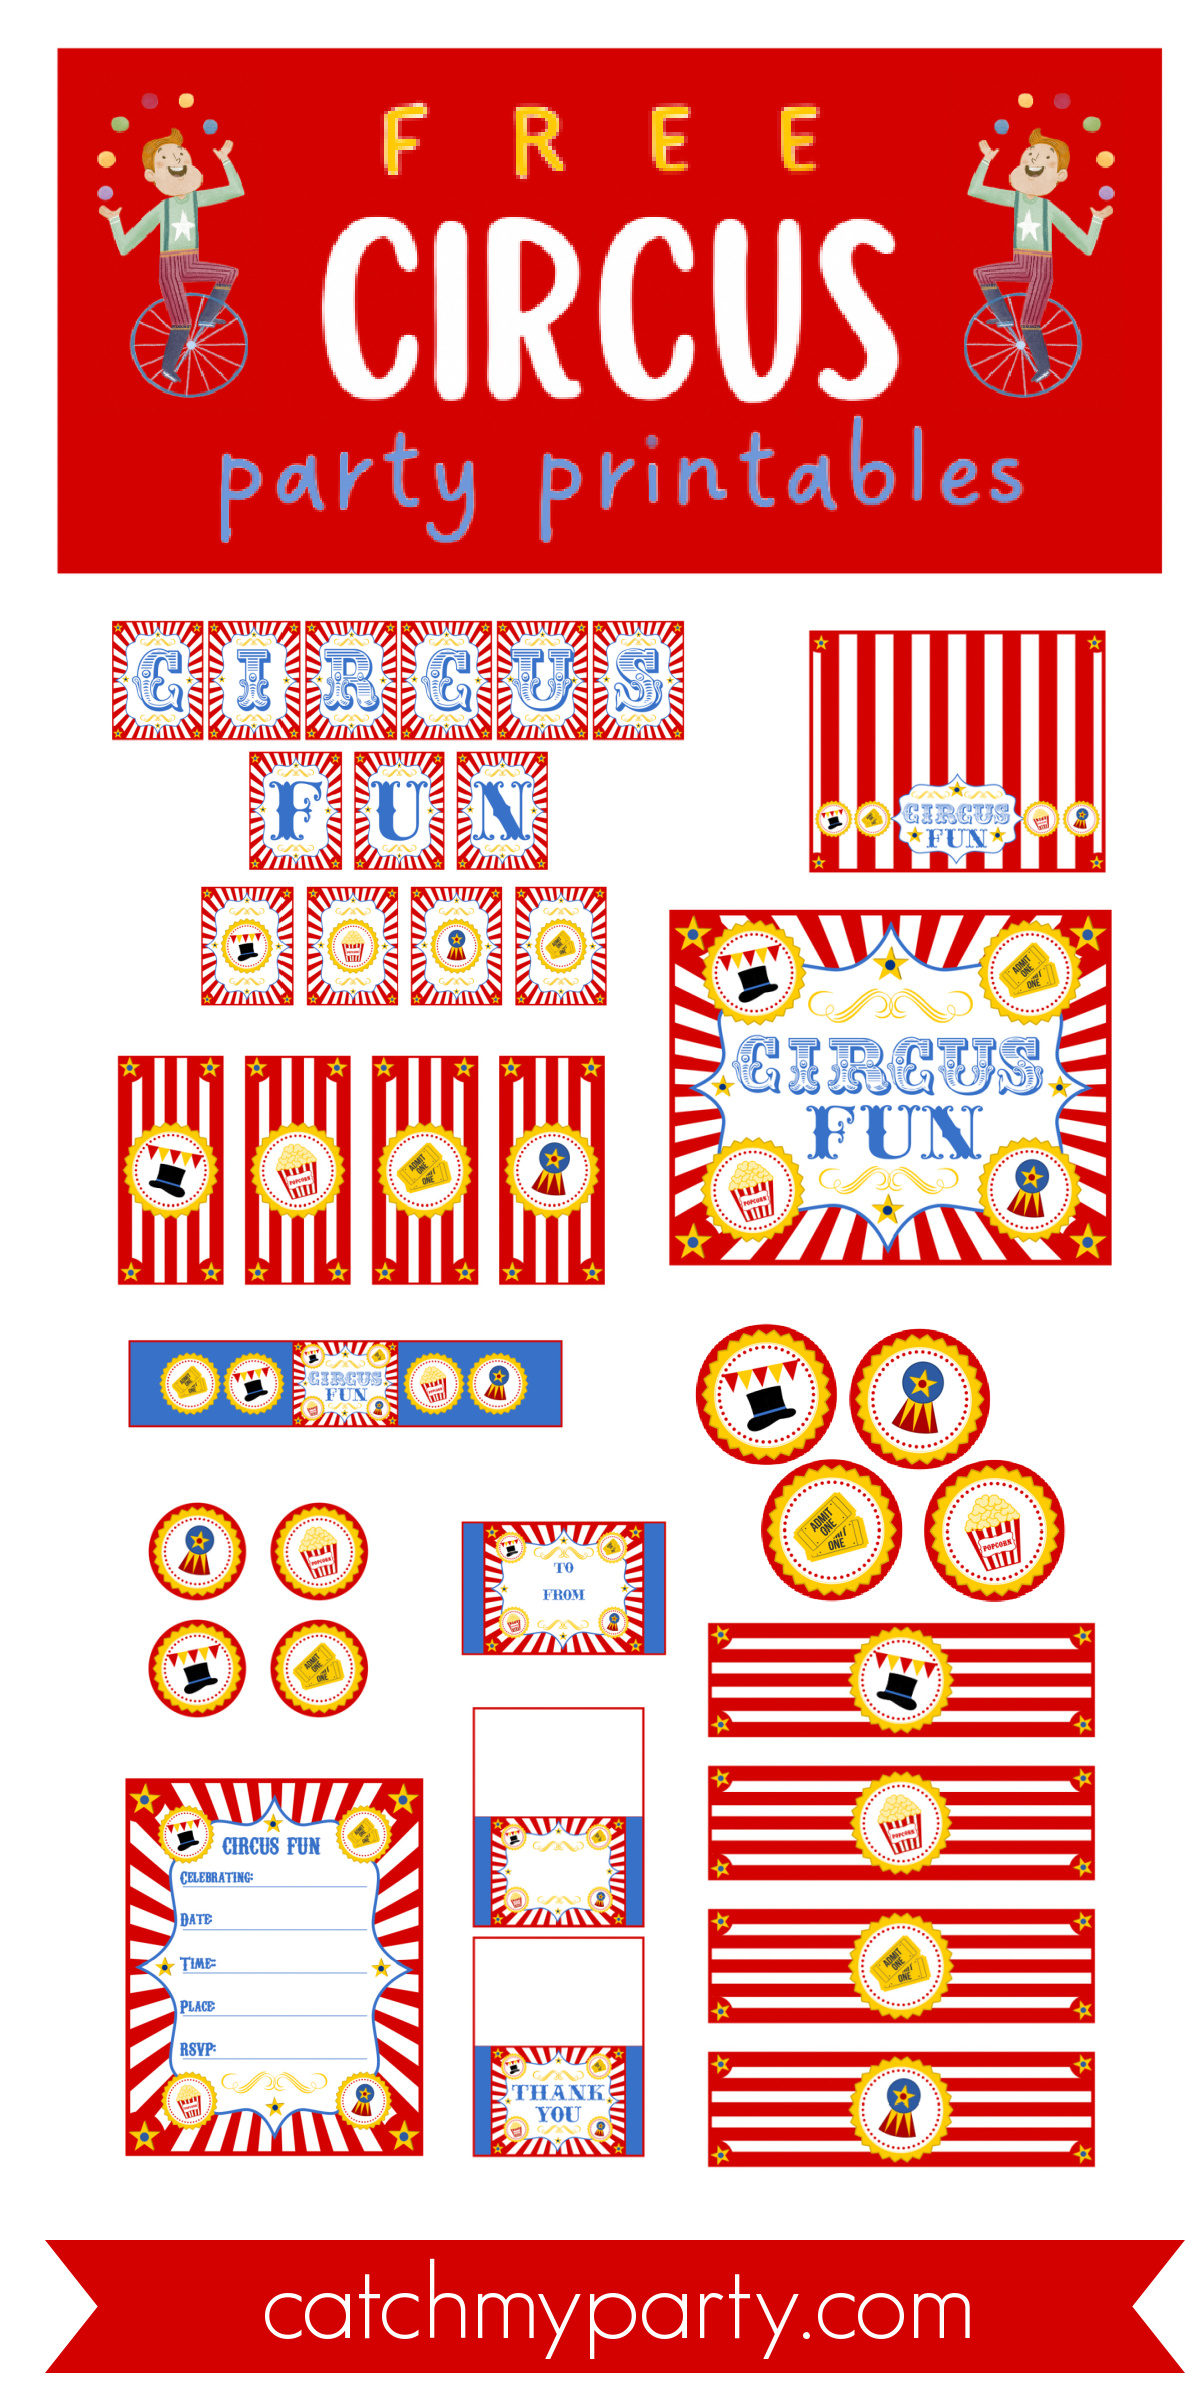 Retro Circus Party Printables (FREE Download)!